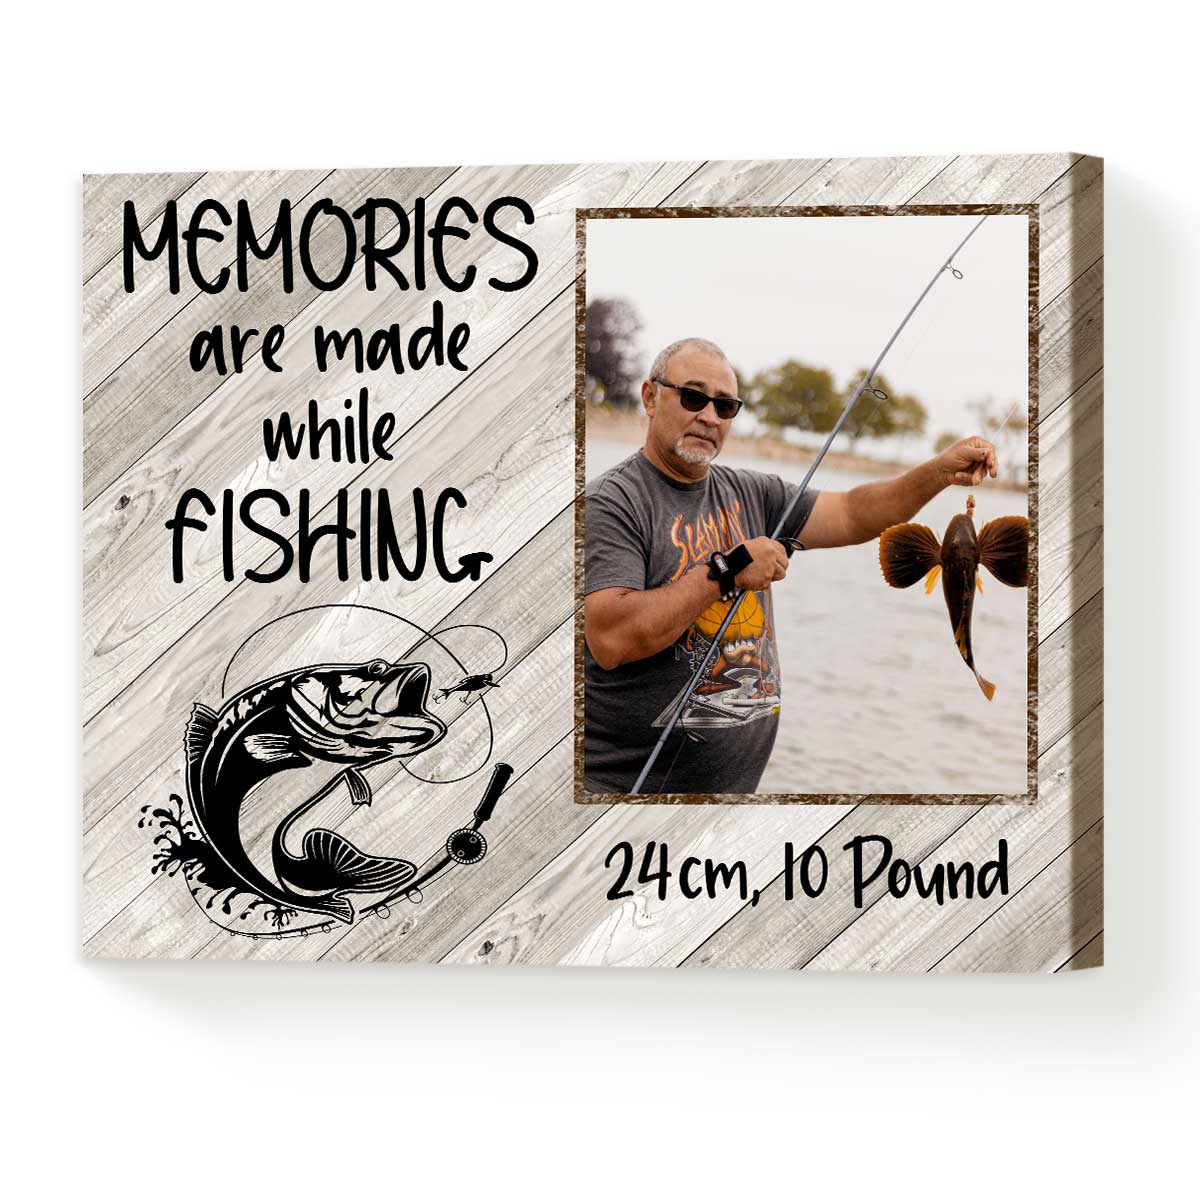 https://benicee.com/wp-content/uploads/2022/09/Custom-Fishing-Gift-for-Men-Best-Gifts-for-Fisherman-Man-Cave-Wall-Decor-Fishing-Gift-Ideas-4.jpg